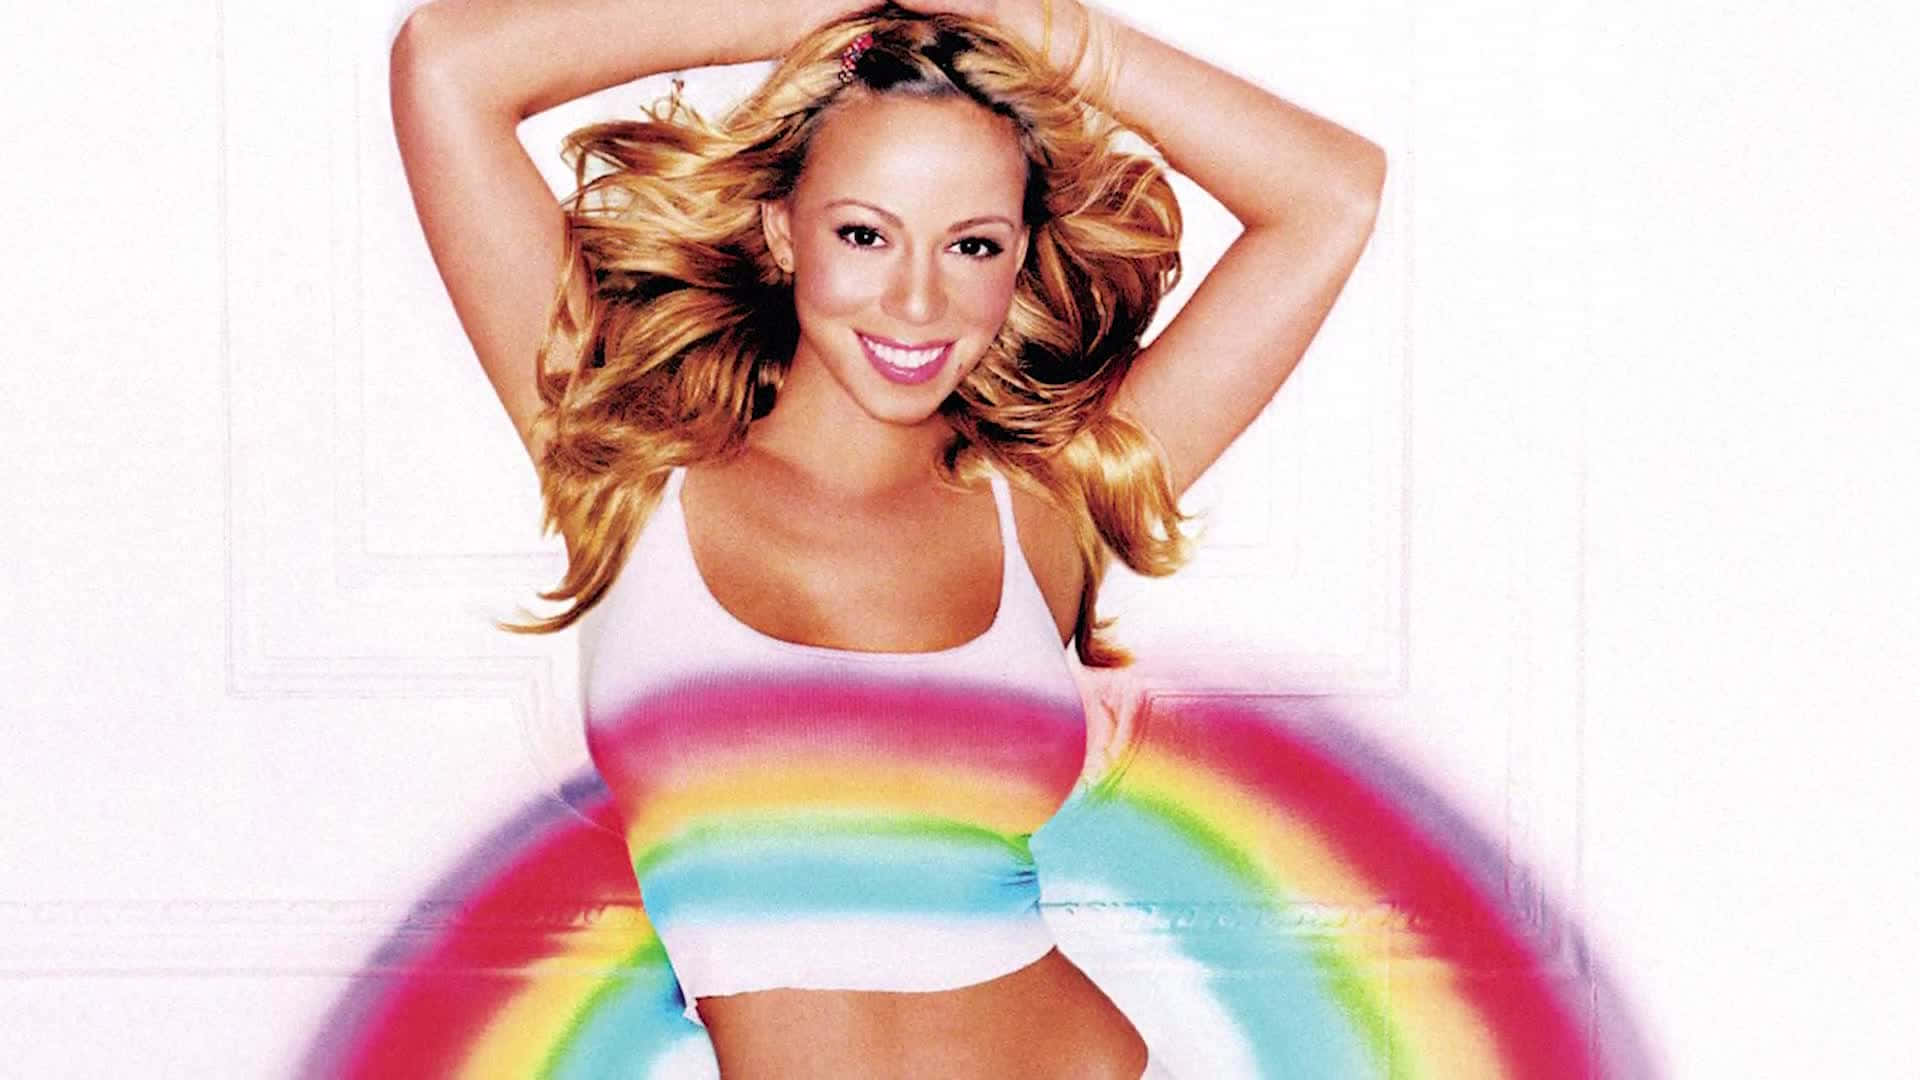 Mariah Carey Performing at a Live Concert Wallpaper